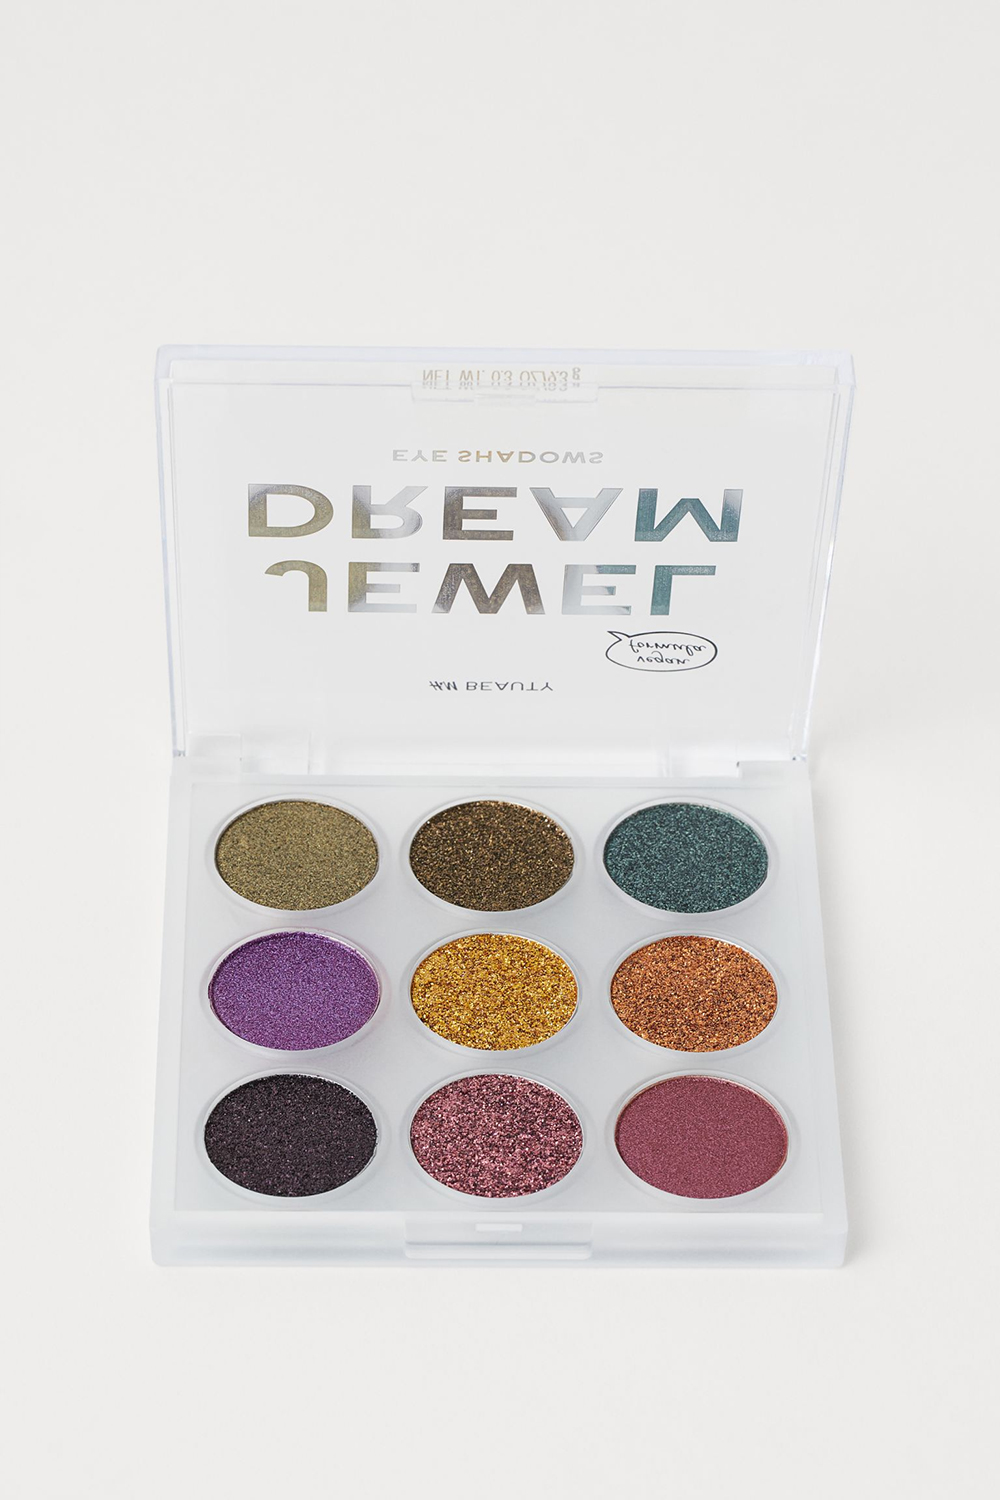 Jewel Dream Vegan Eye Shadow Palette by H&M